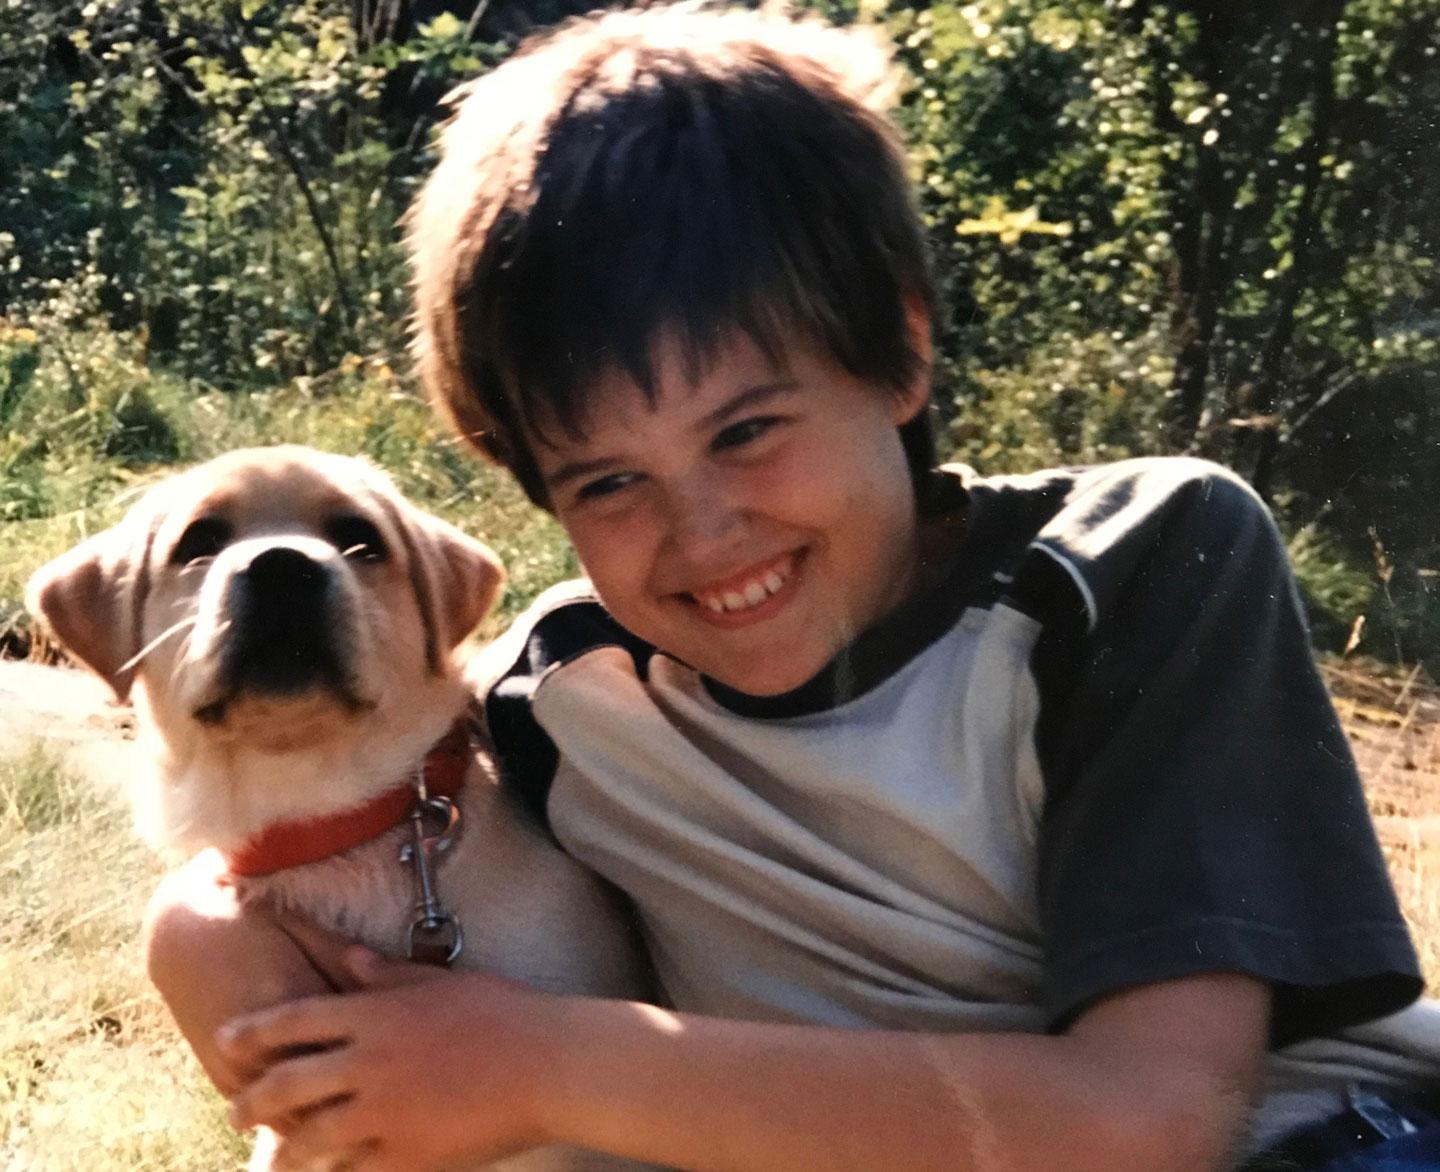 Smiling boy hugging a dog outdoors.